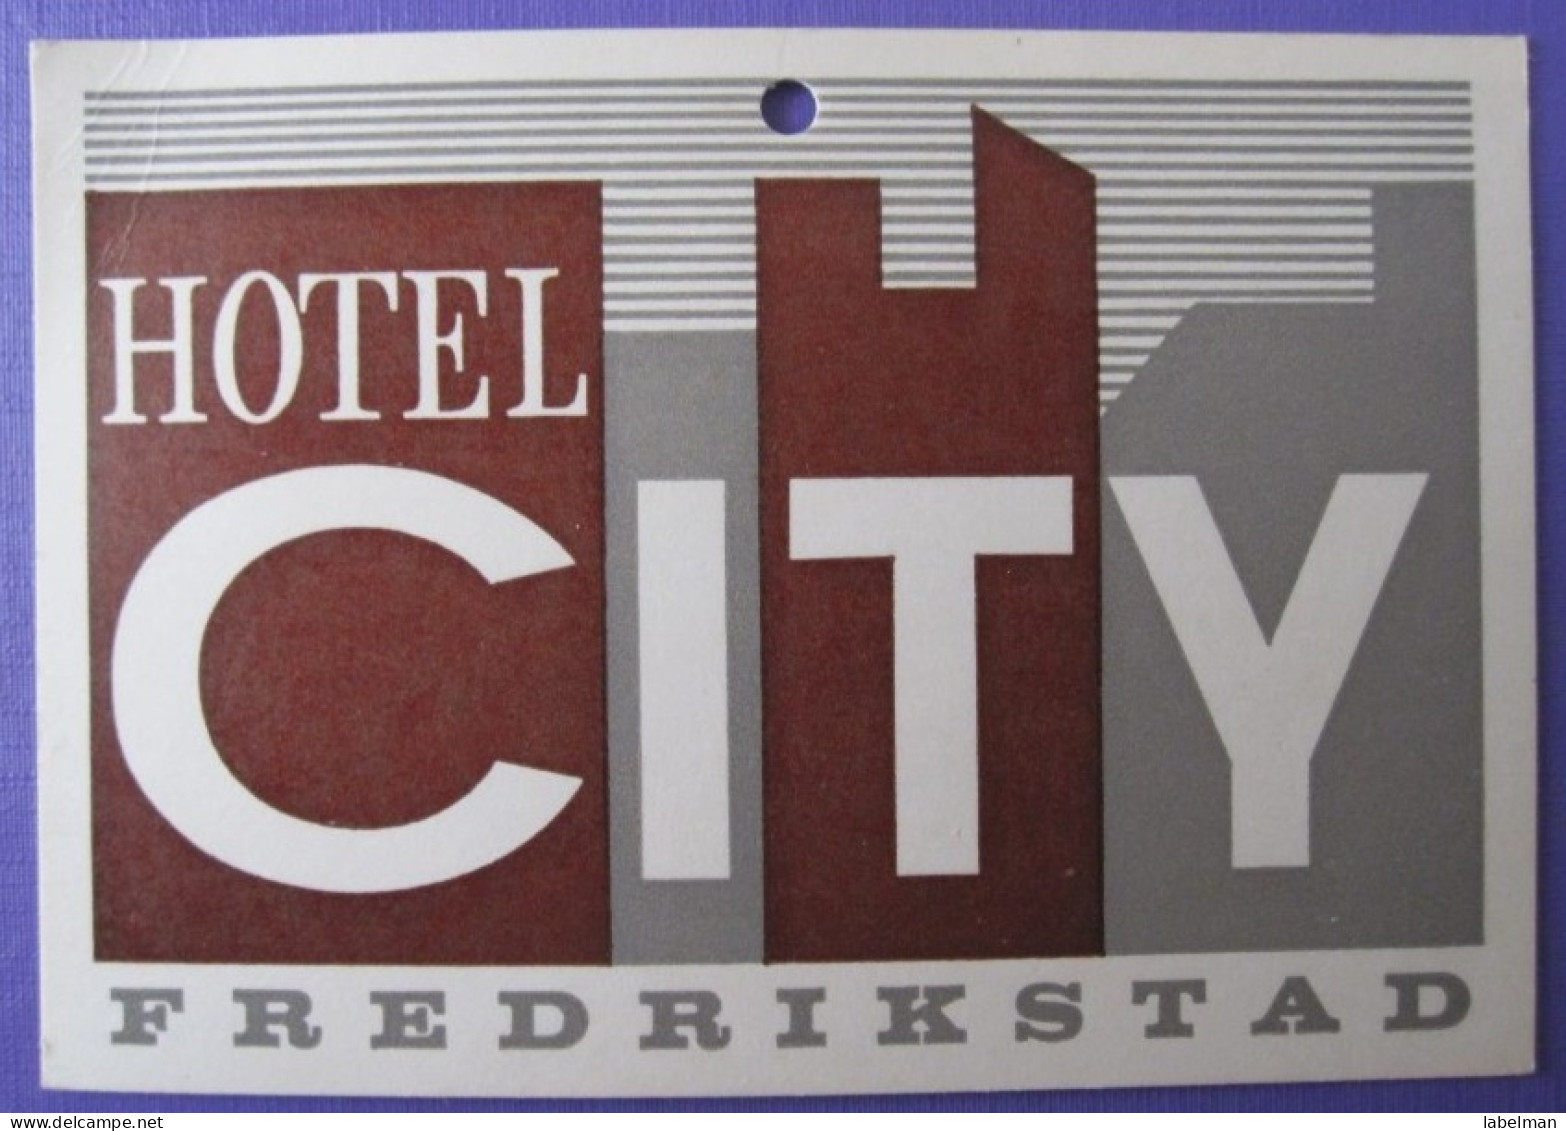 HOTEL HOTELLI HOTELL HOTELLET PENSION CITY FREDRIKSTAD NORVEGE NORWAY NORGE DECAL LUGGAGE LABEL ETIQUETTE AUFKLEBER - Hotelaufkleber